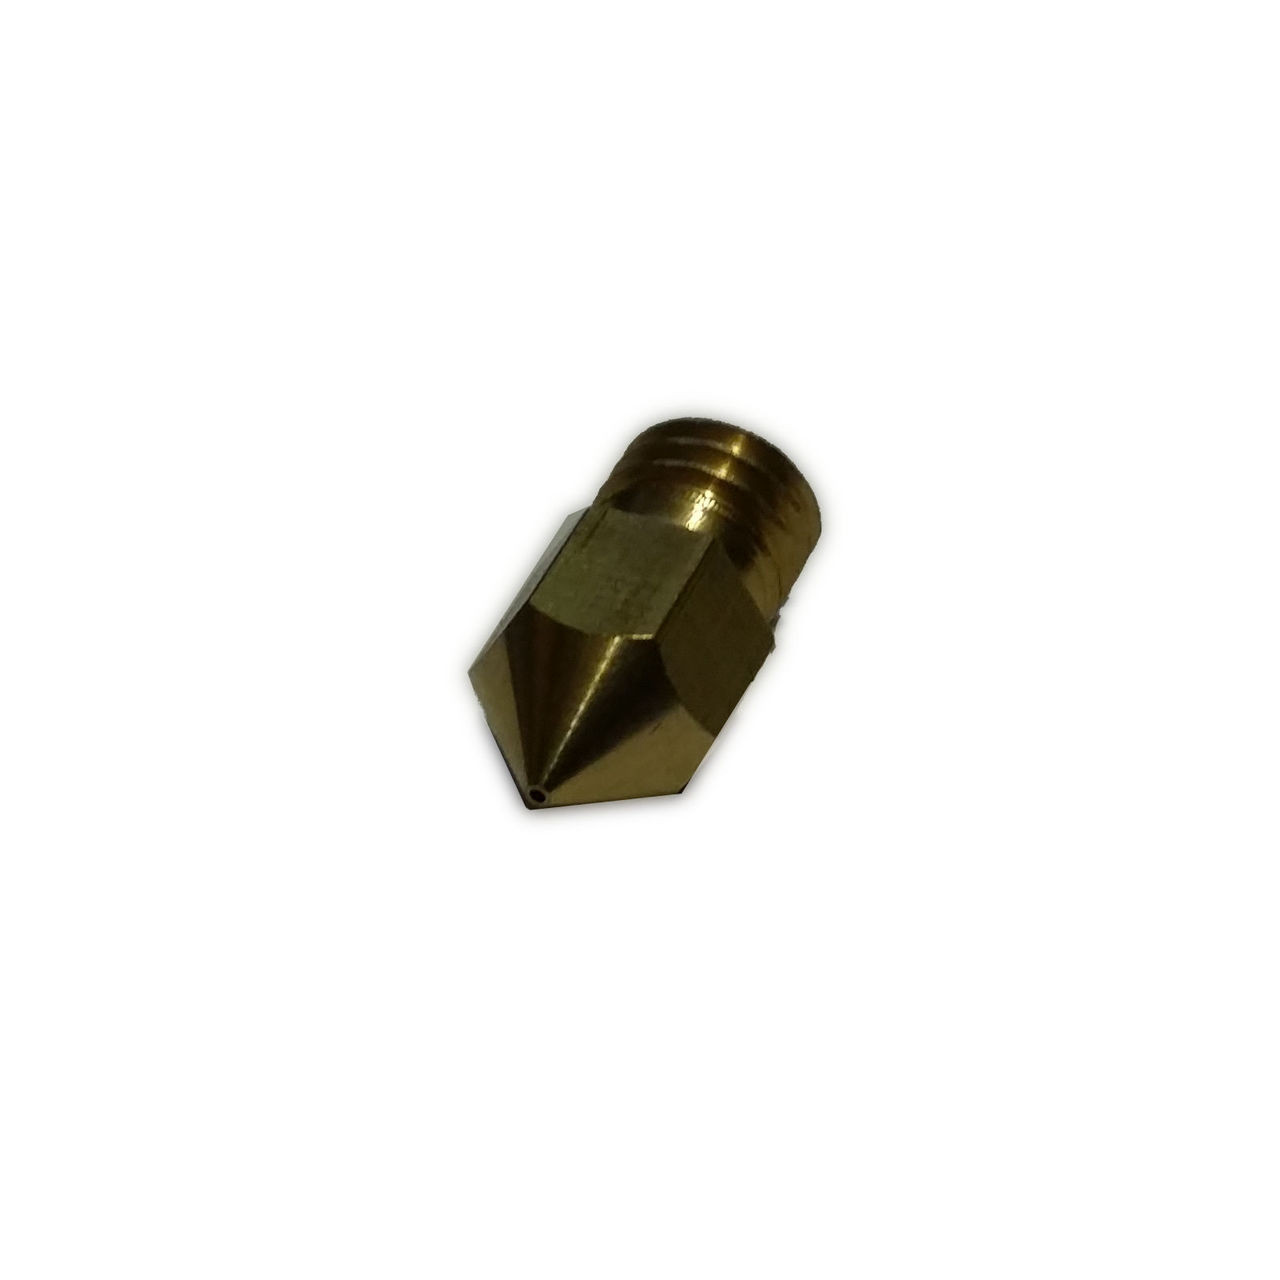 RepRap M6 Brass Nozzle - 0.1mm